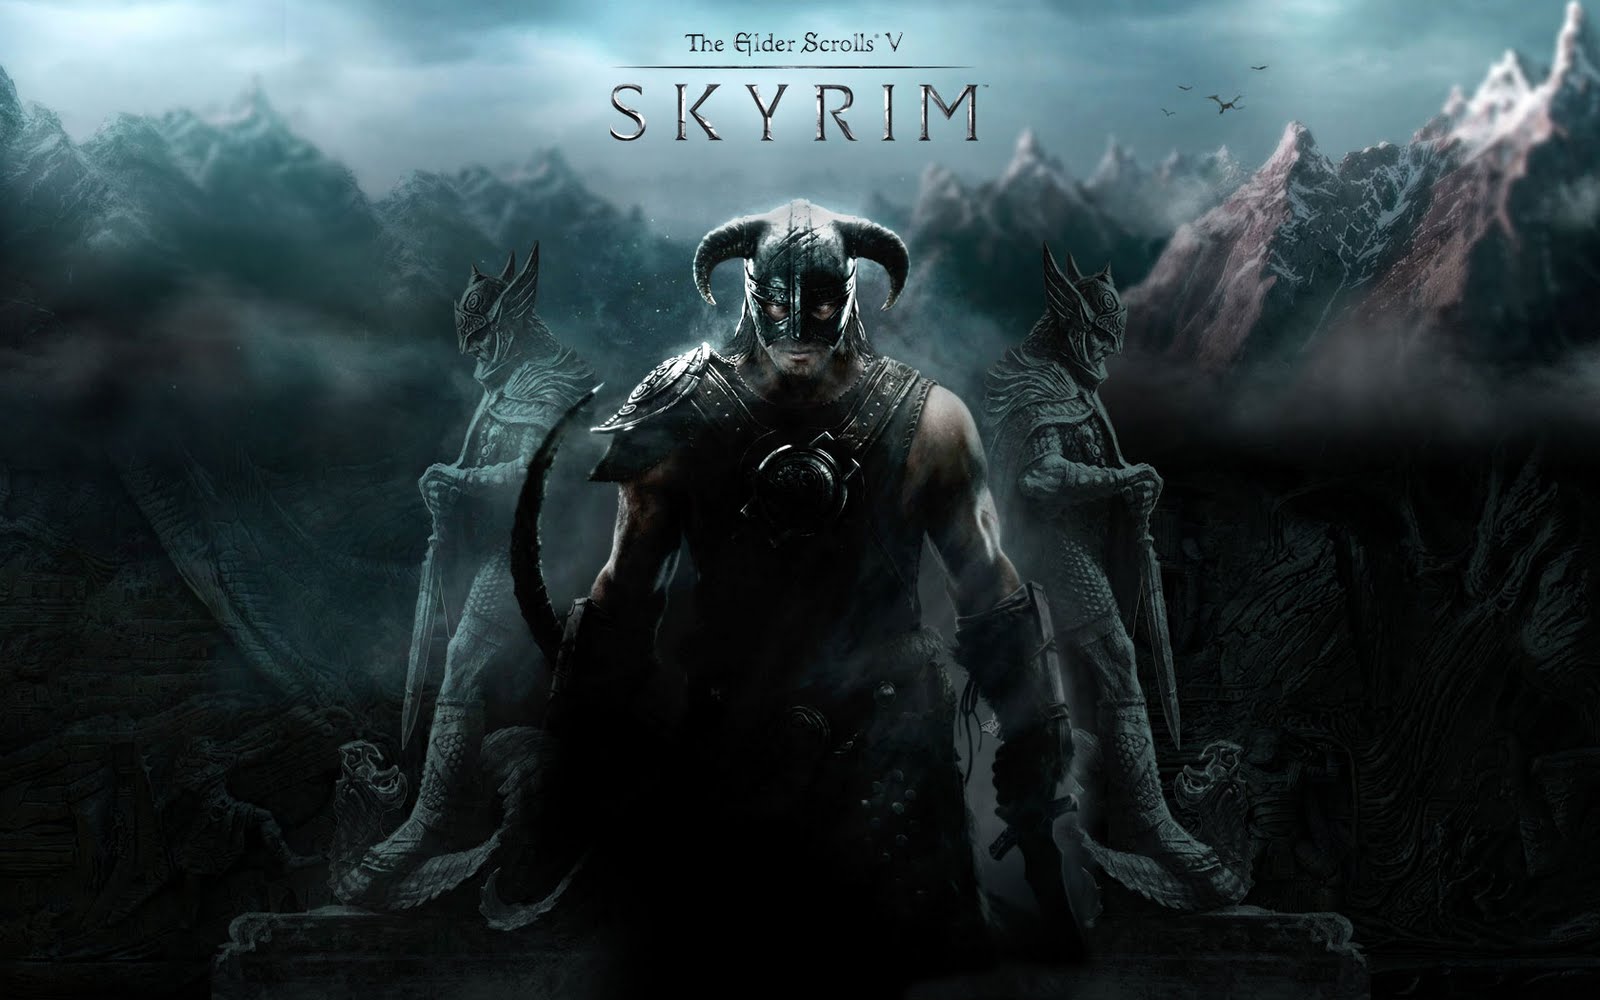 The Elder Scrolls V: Skyrim #21